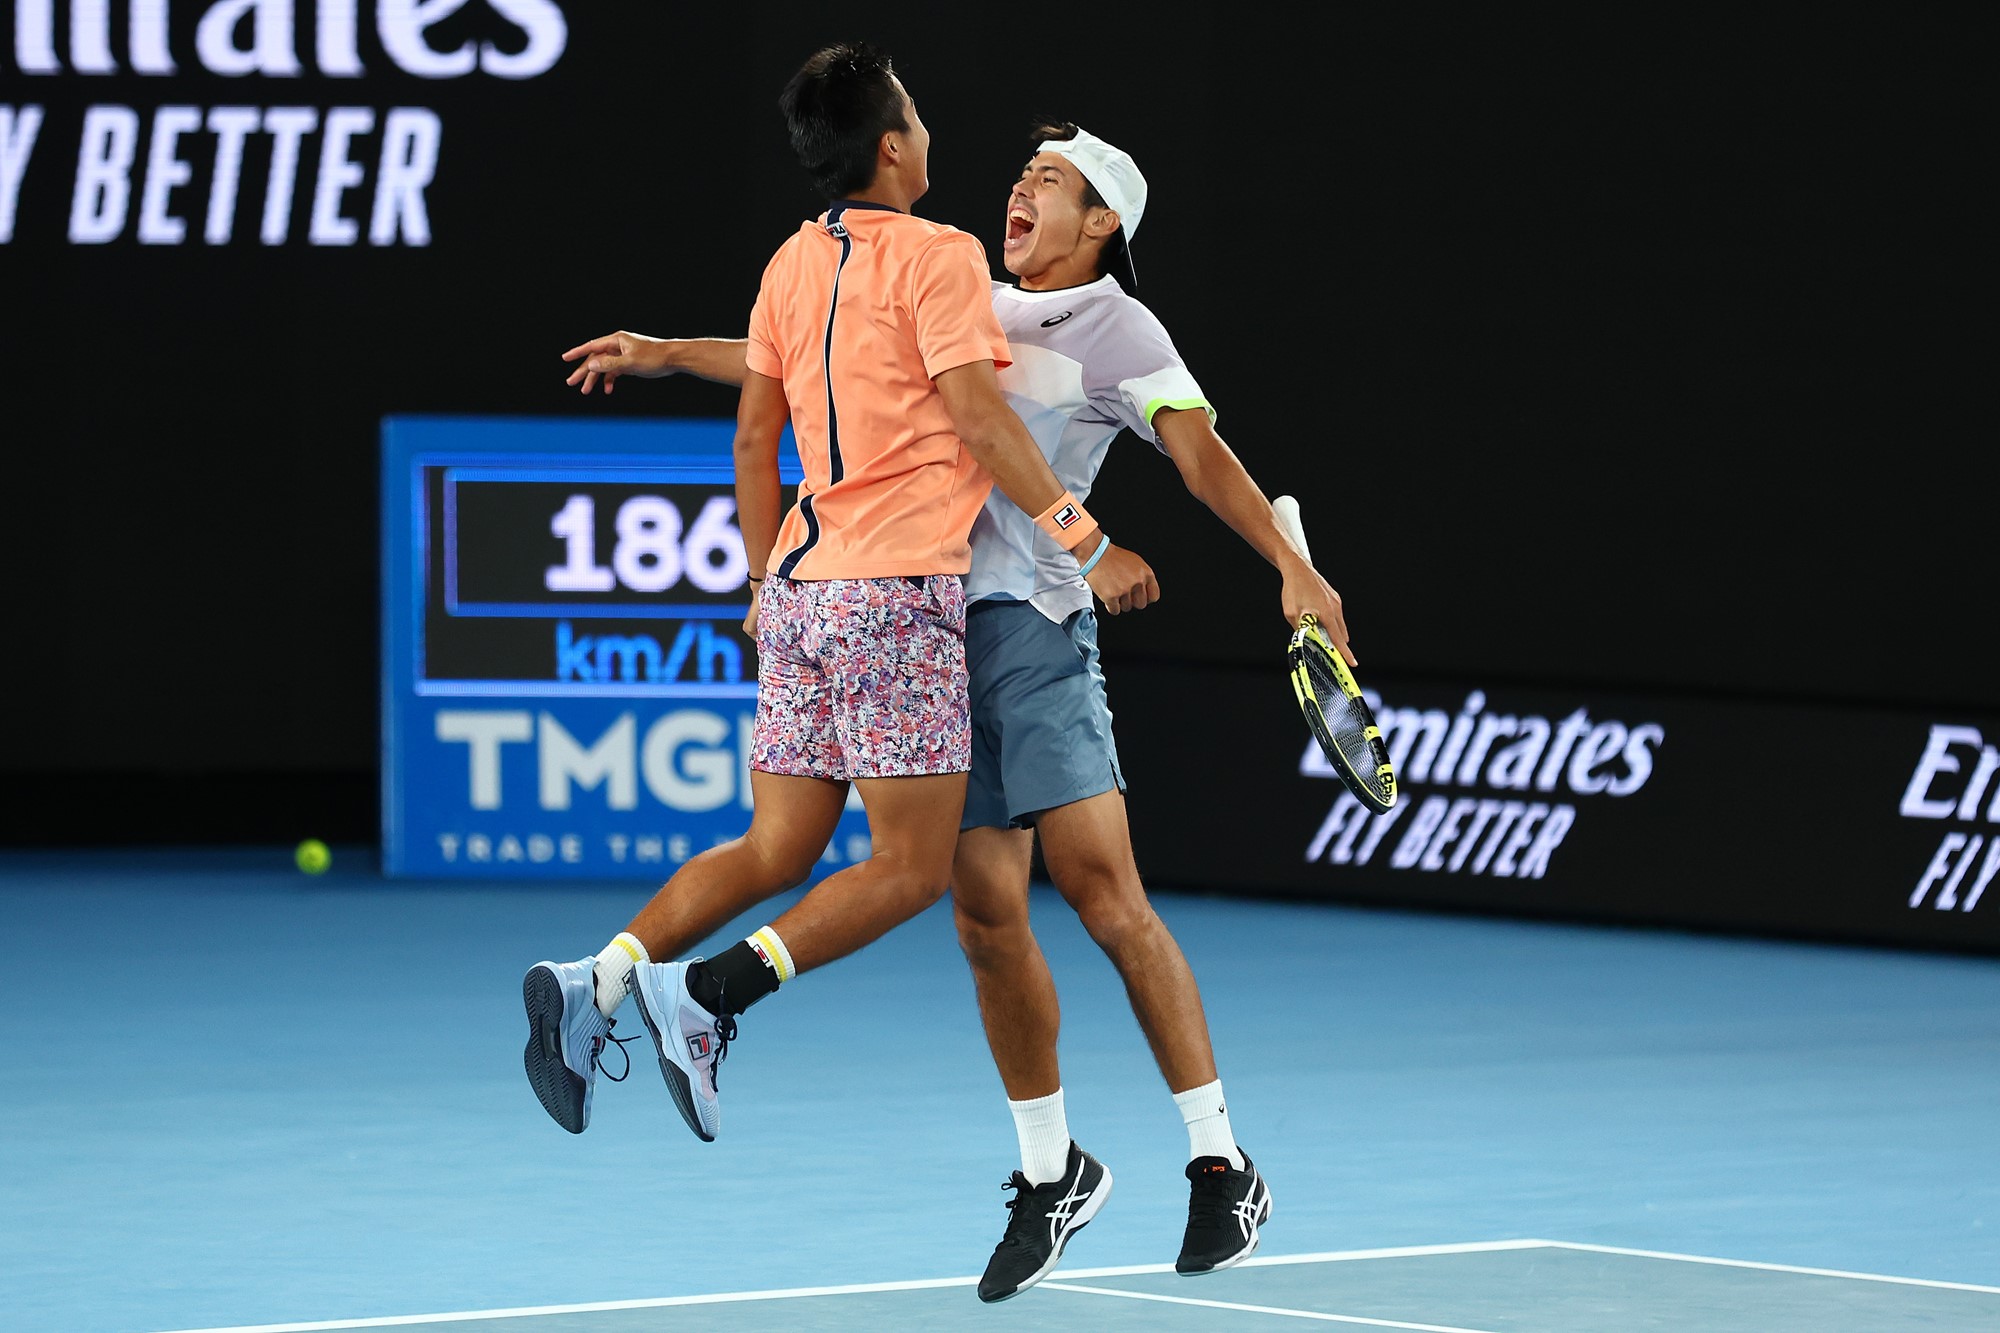 Jason Kubler and Rinky Hijikata claim fairytale Australian Open mens doubles victory